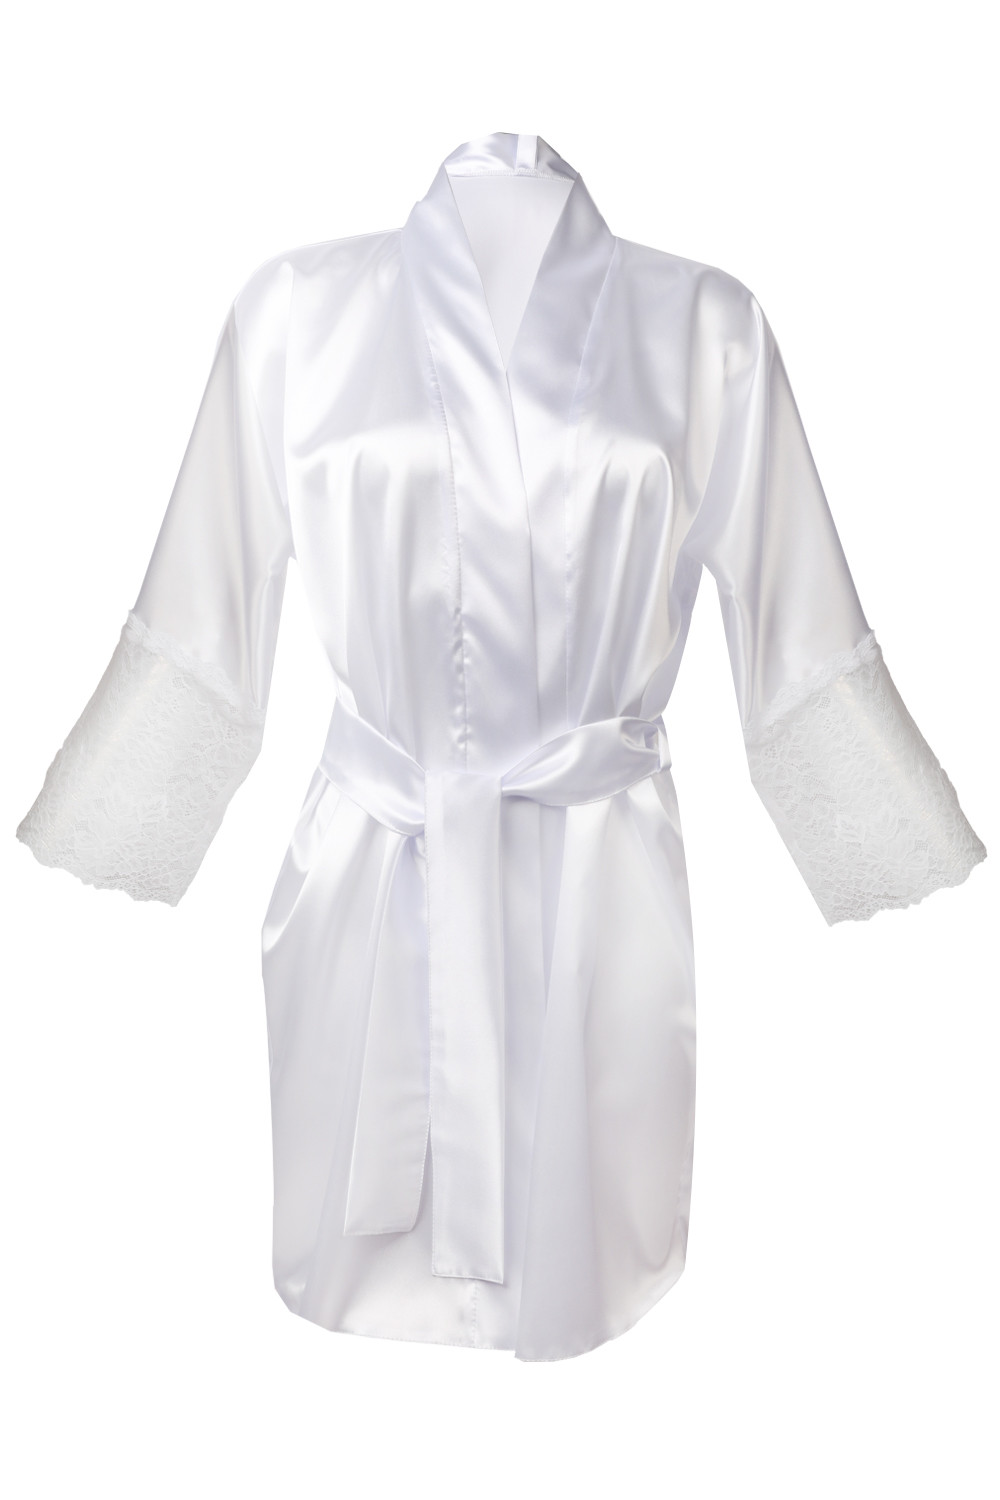 Dámský župan Housecoat model 16664243 White L bílá - DKaren